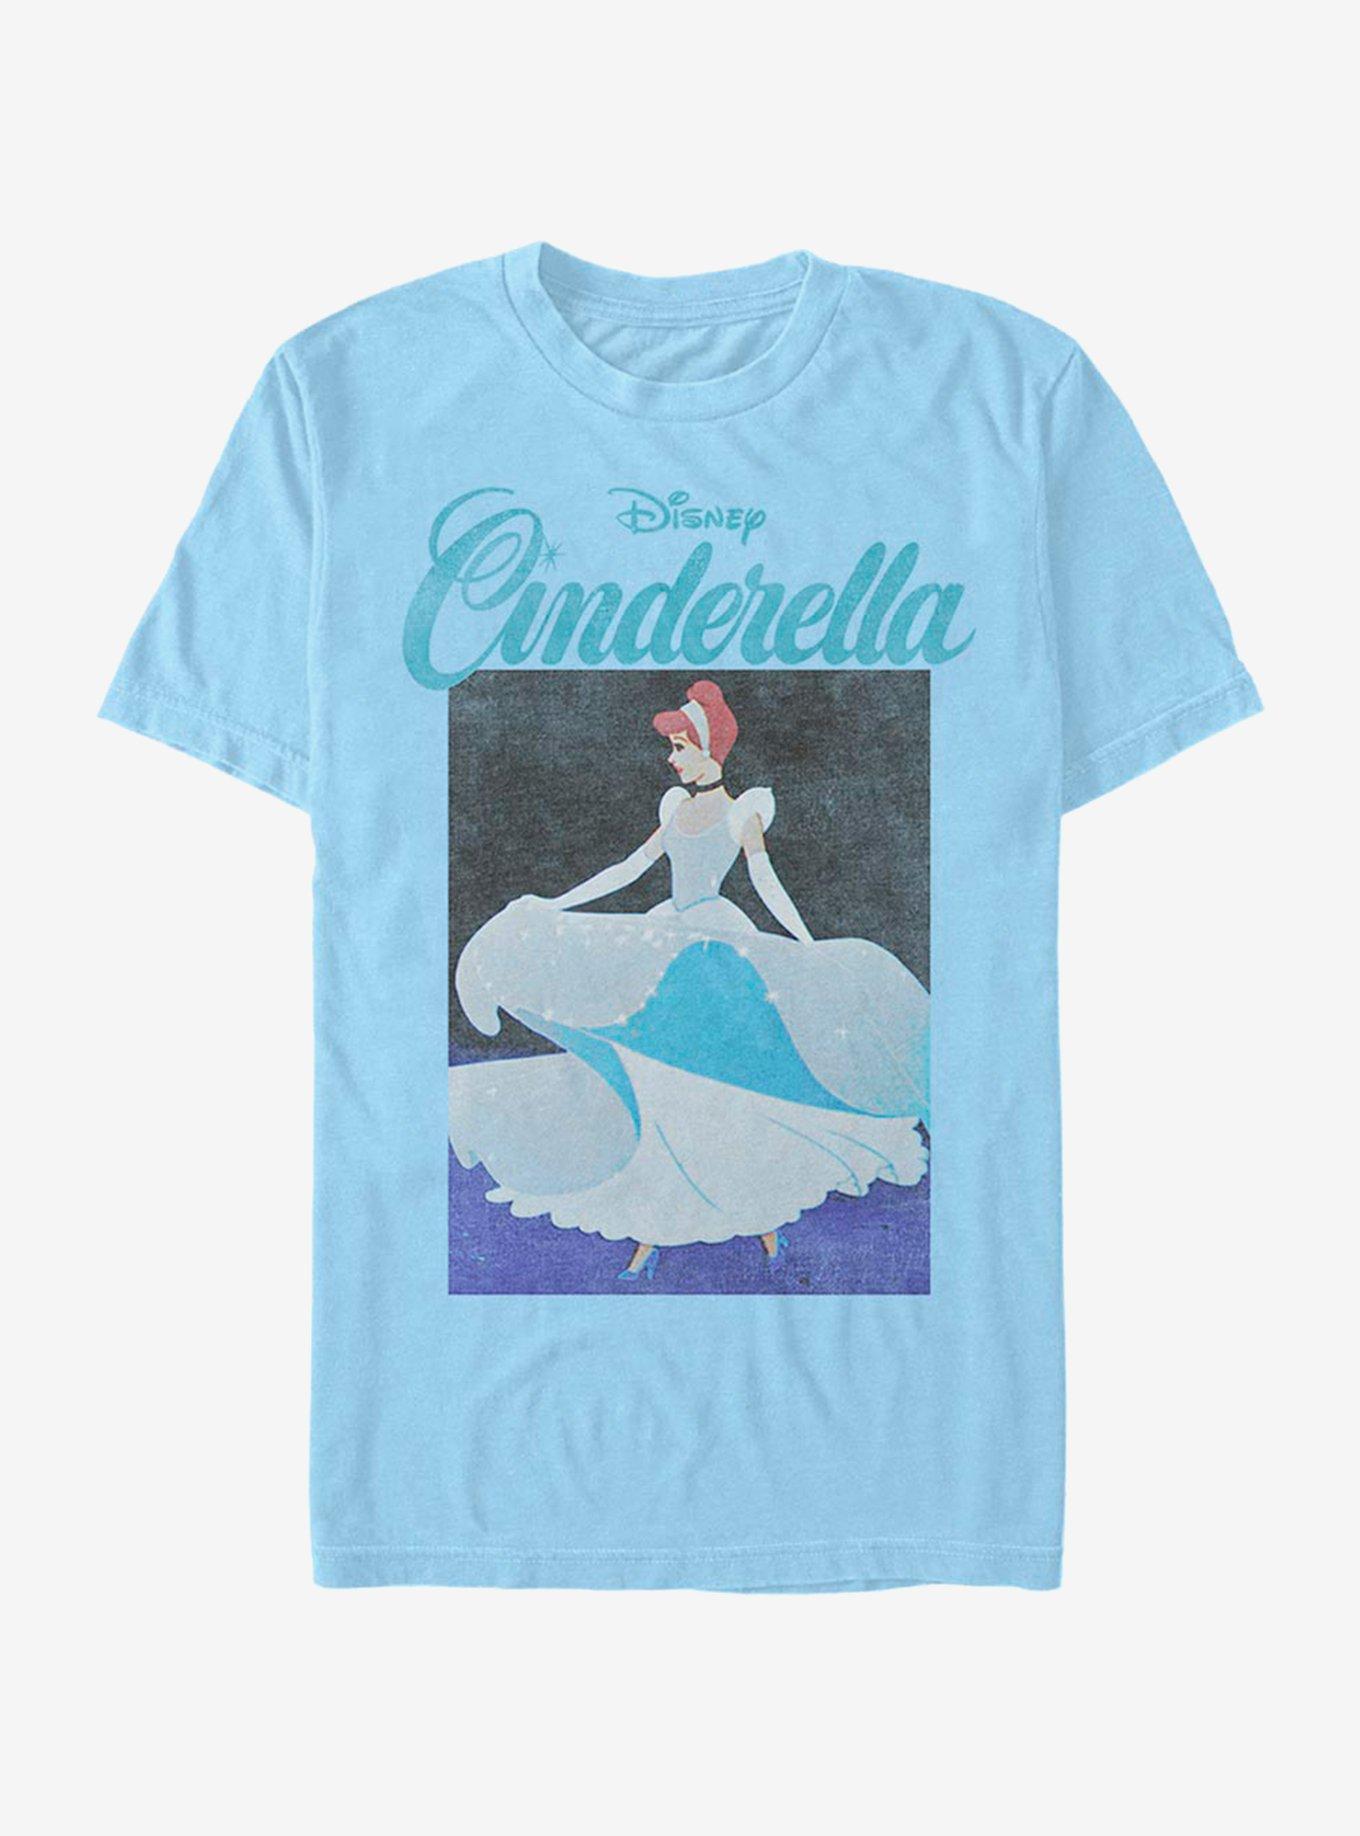 Disney Cinderella Square PhotoT-Shirt T-Shirt